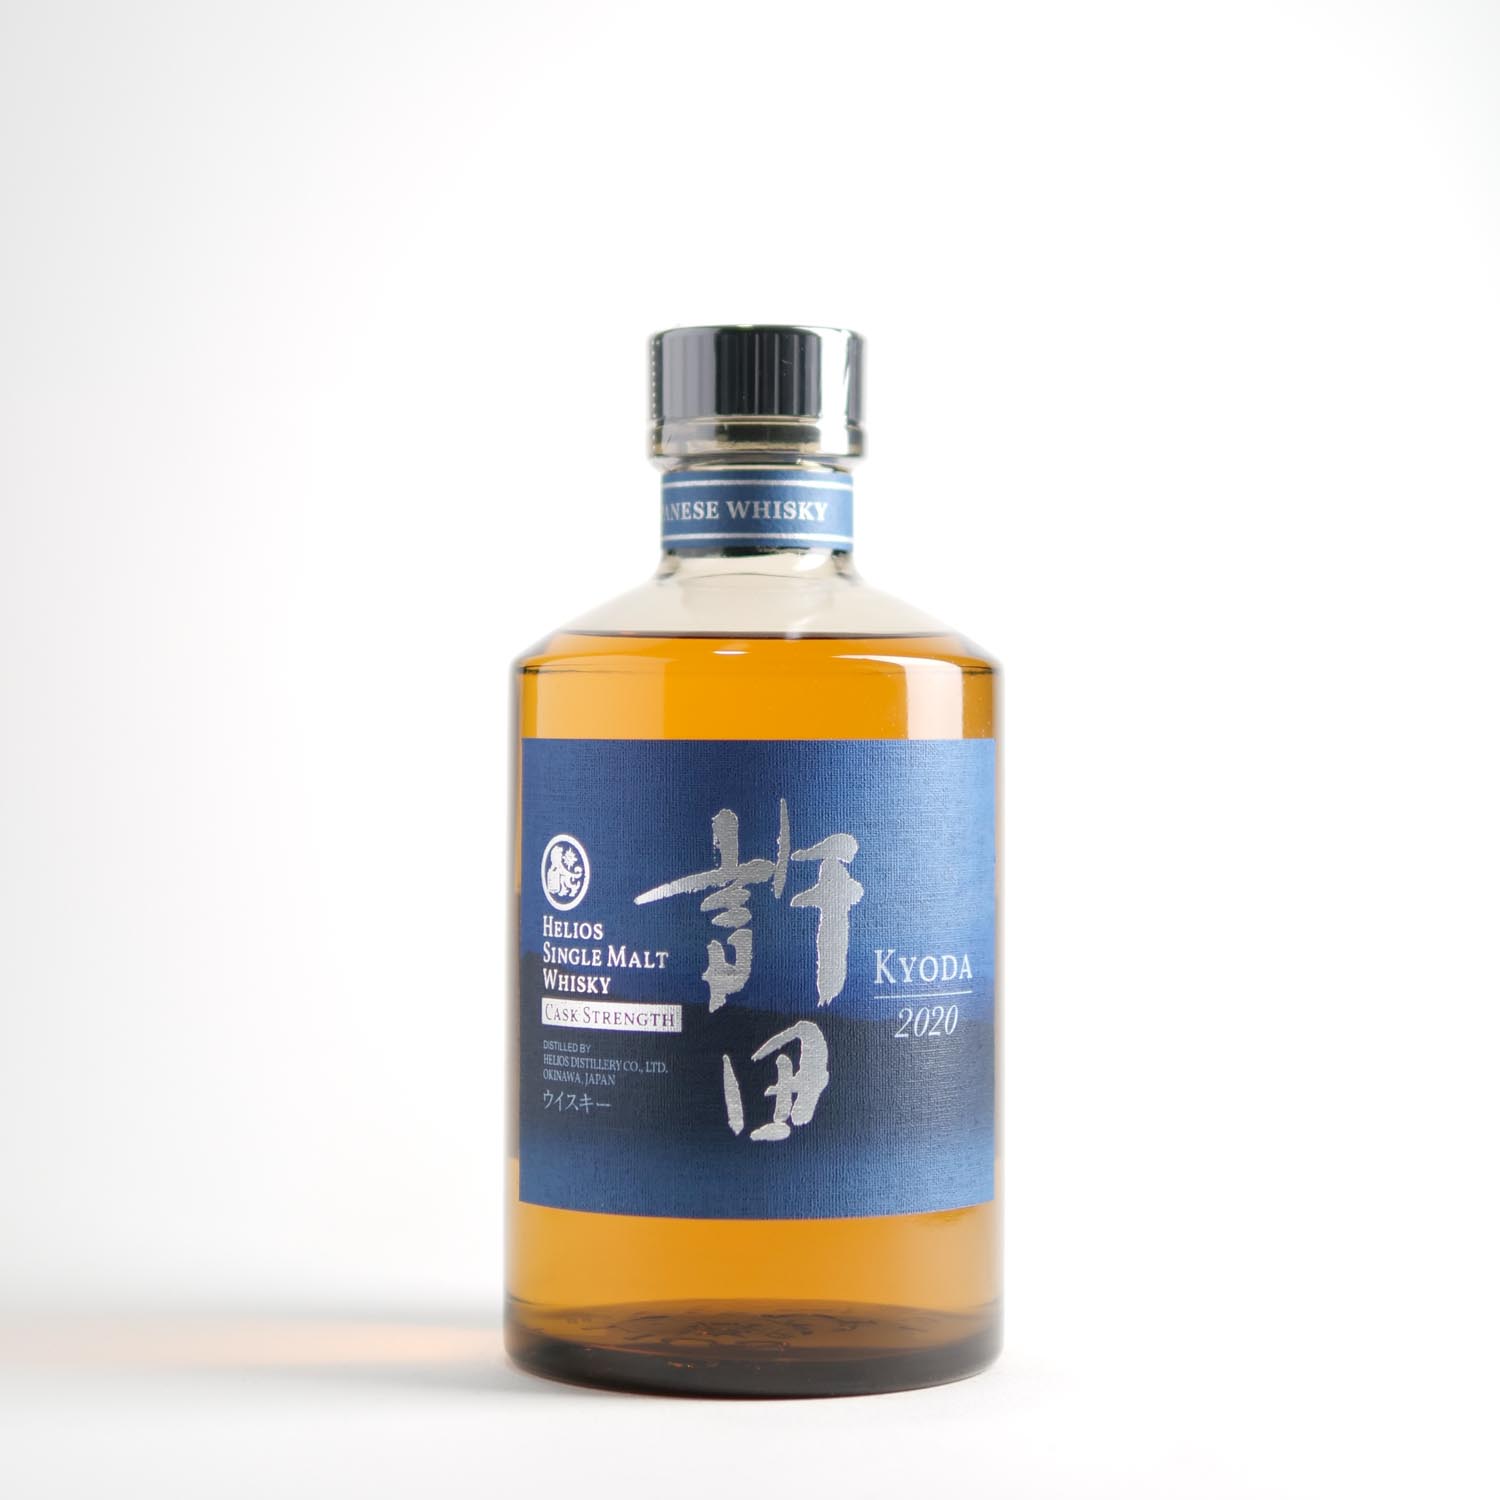 Helios Kyoda Single Malt Whisky